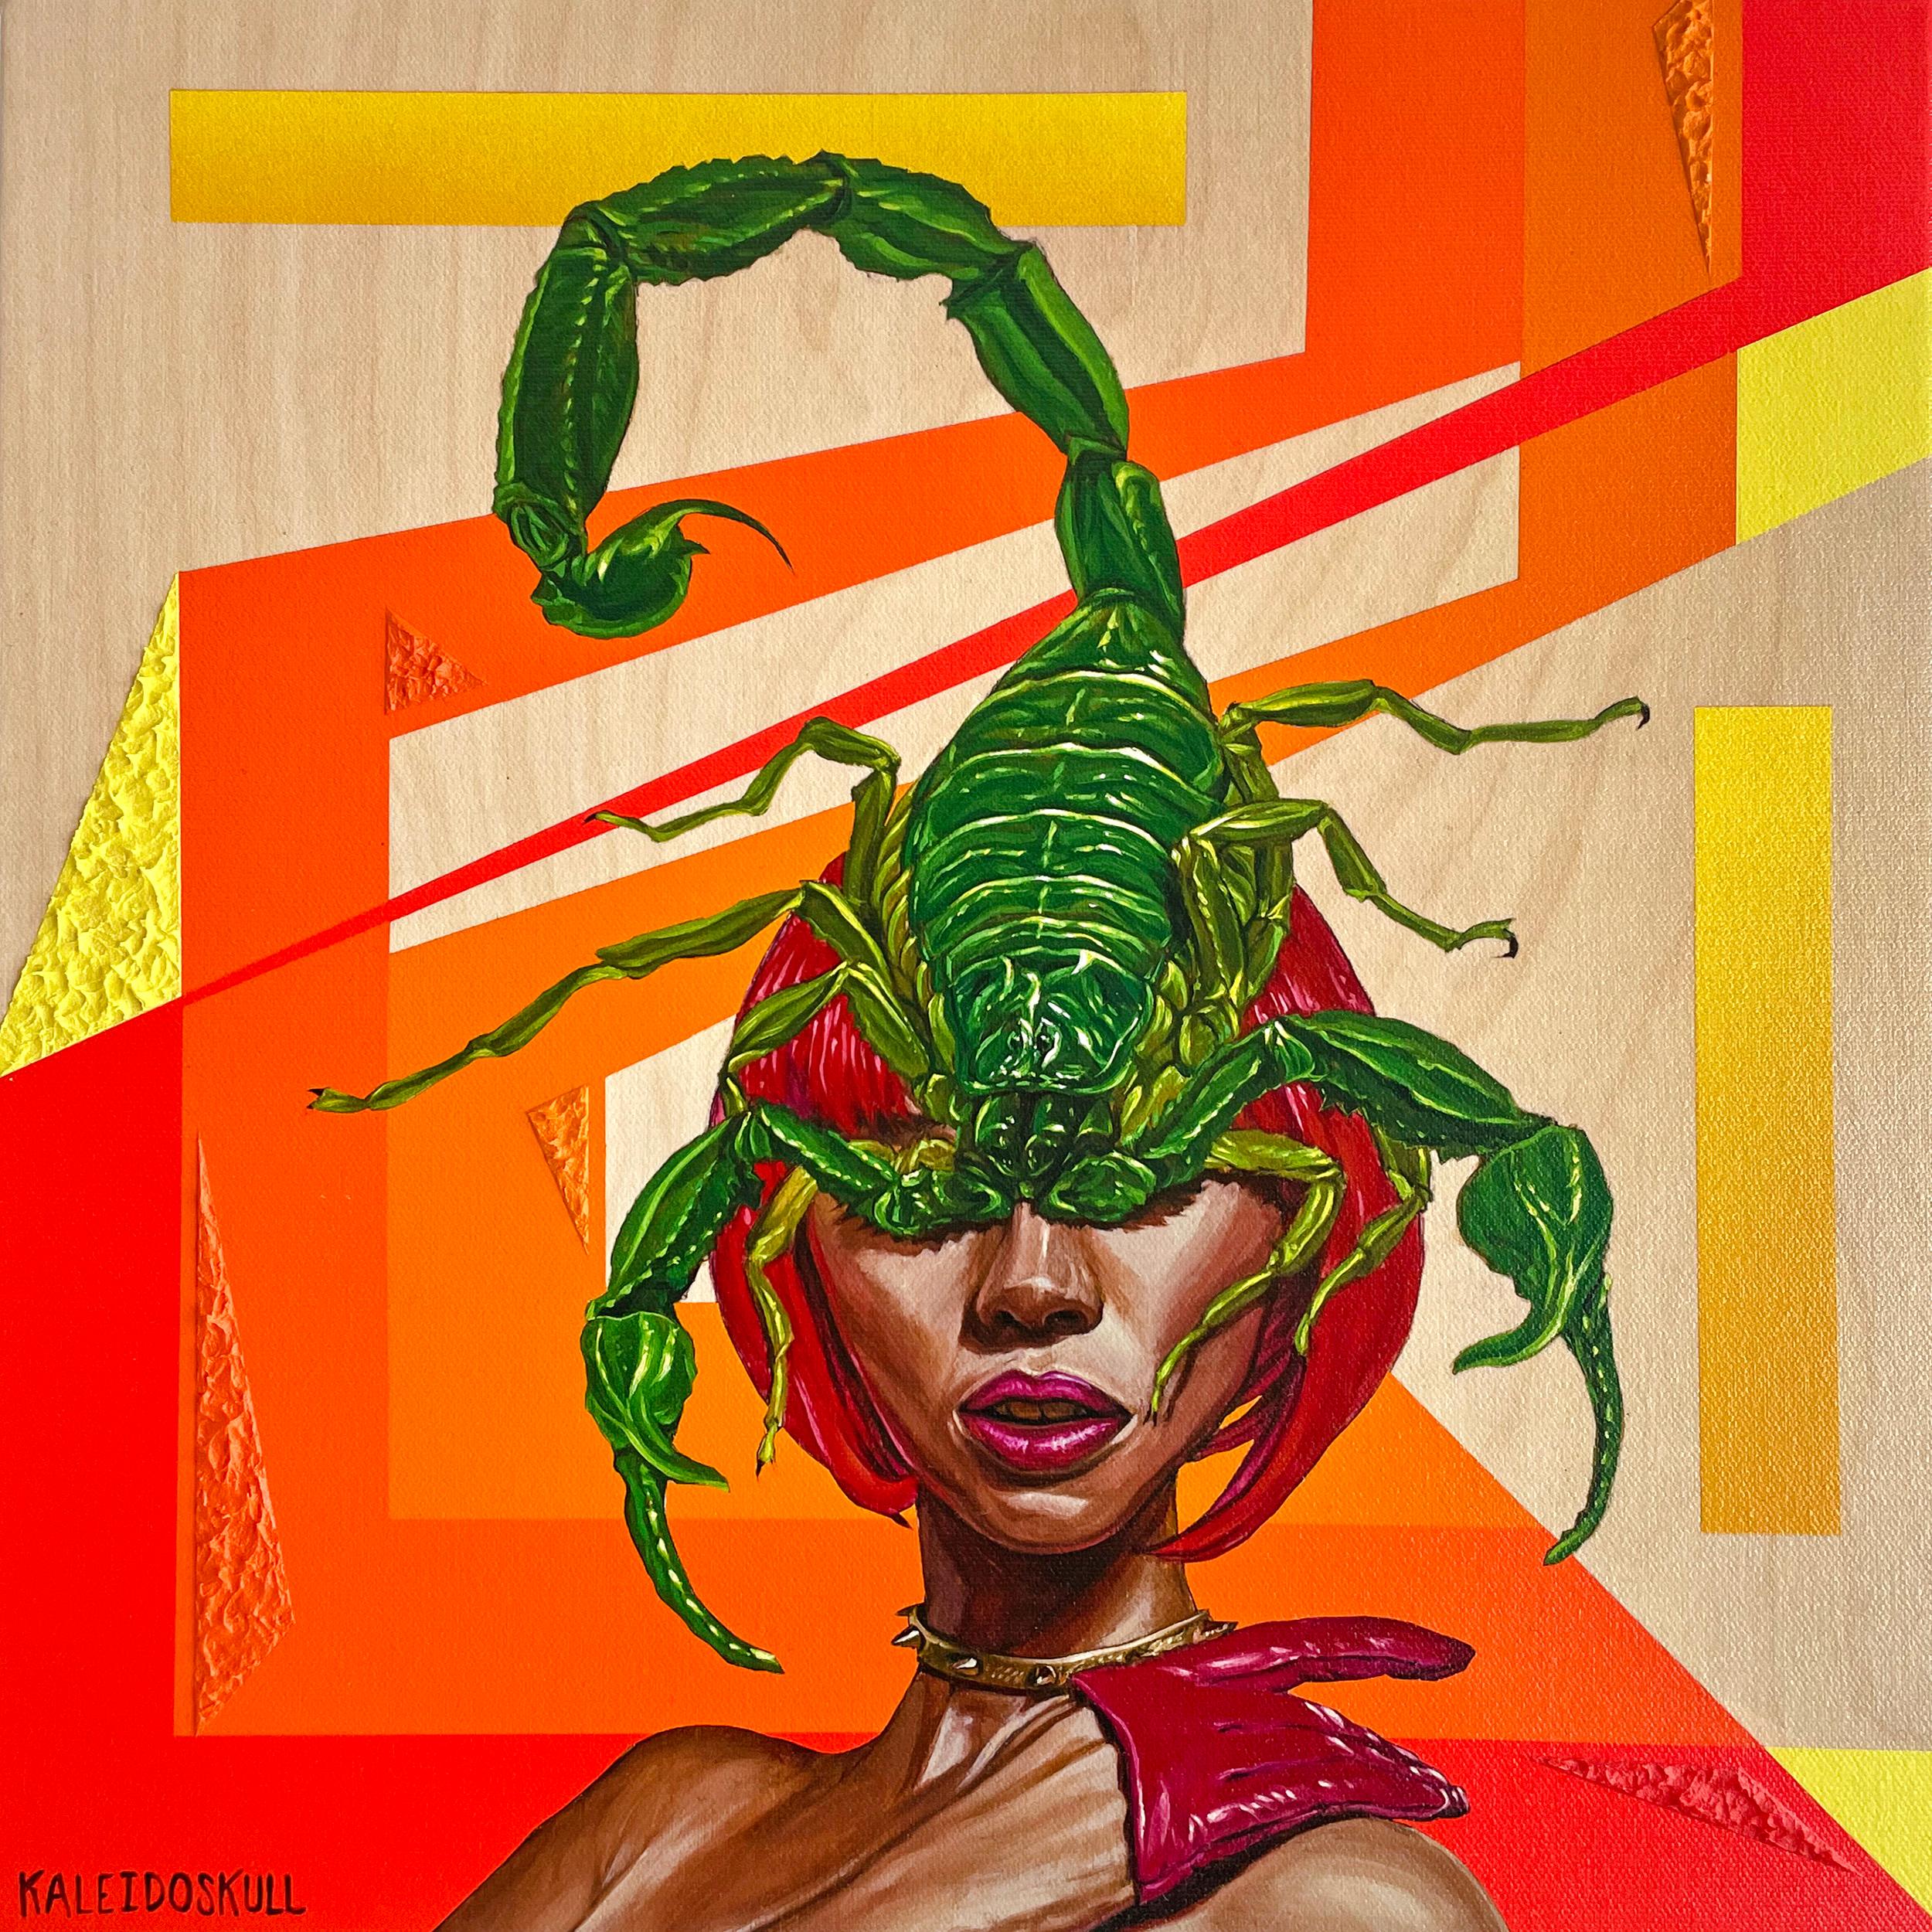 Monty Montgomery and Tony Philippou Abstract Print - Abstract Mixed Media Artwork, "Scorpion Tongue"